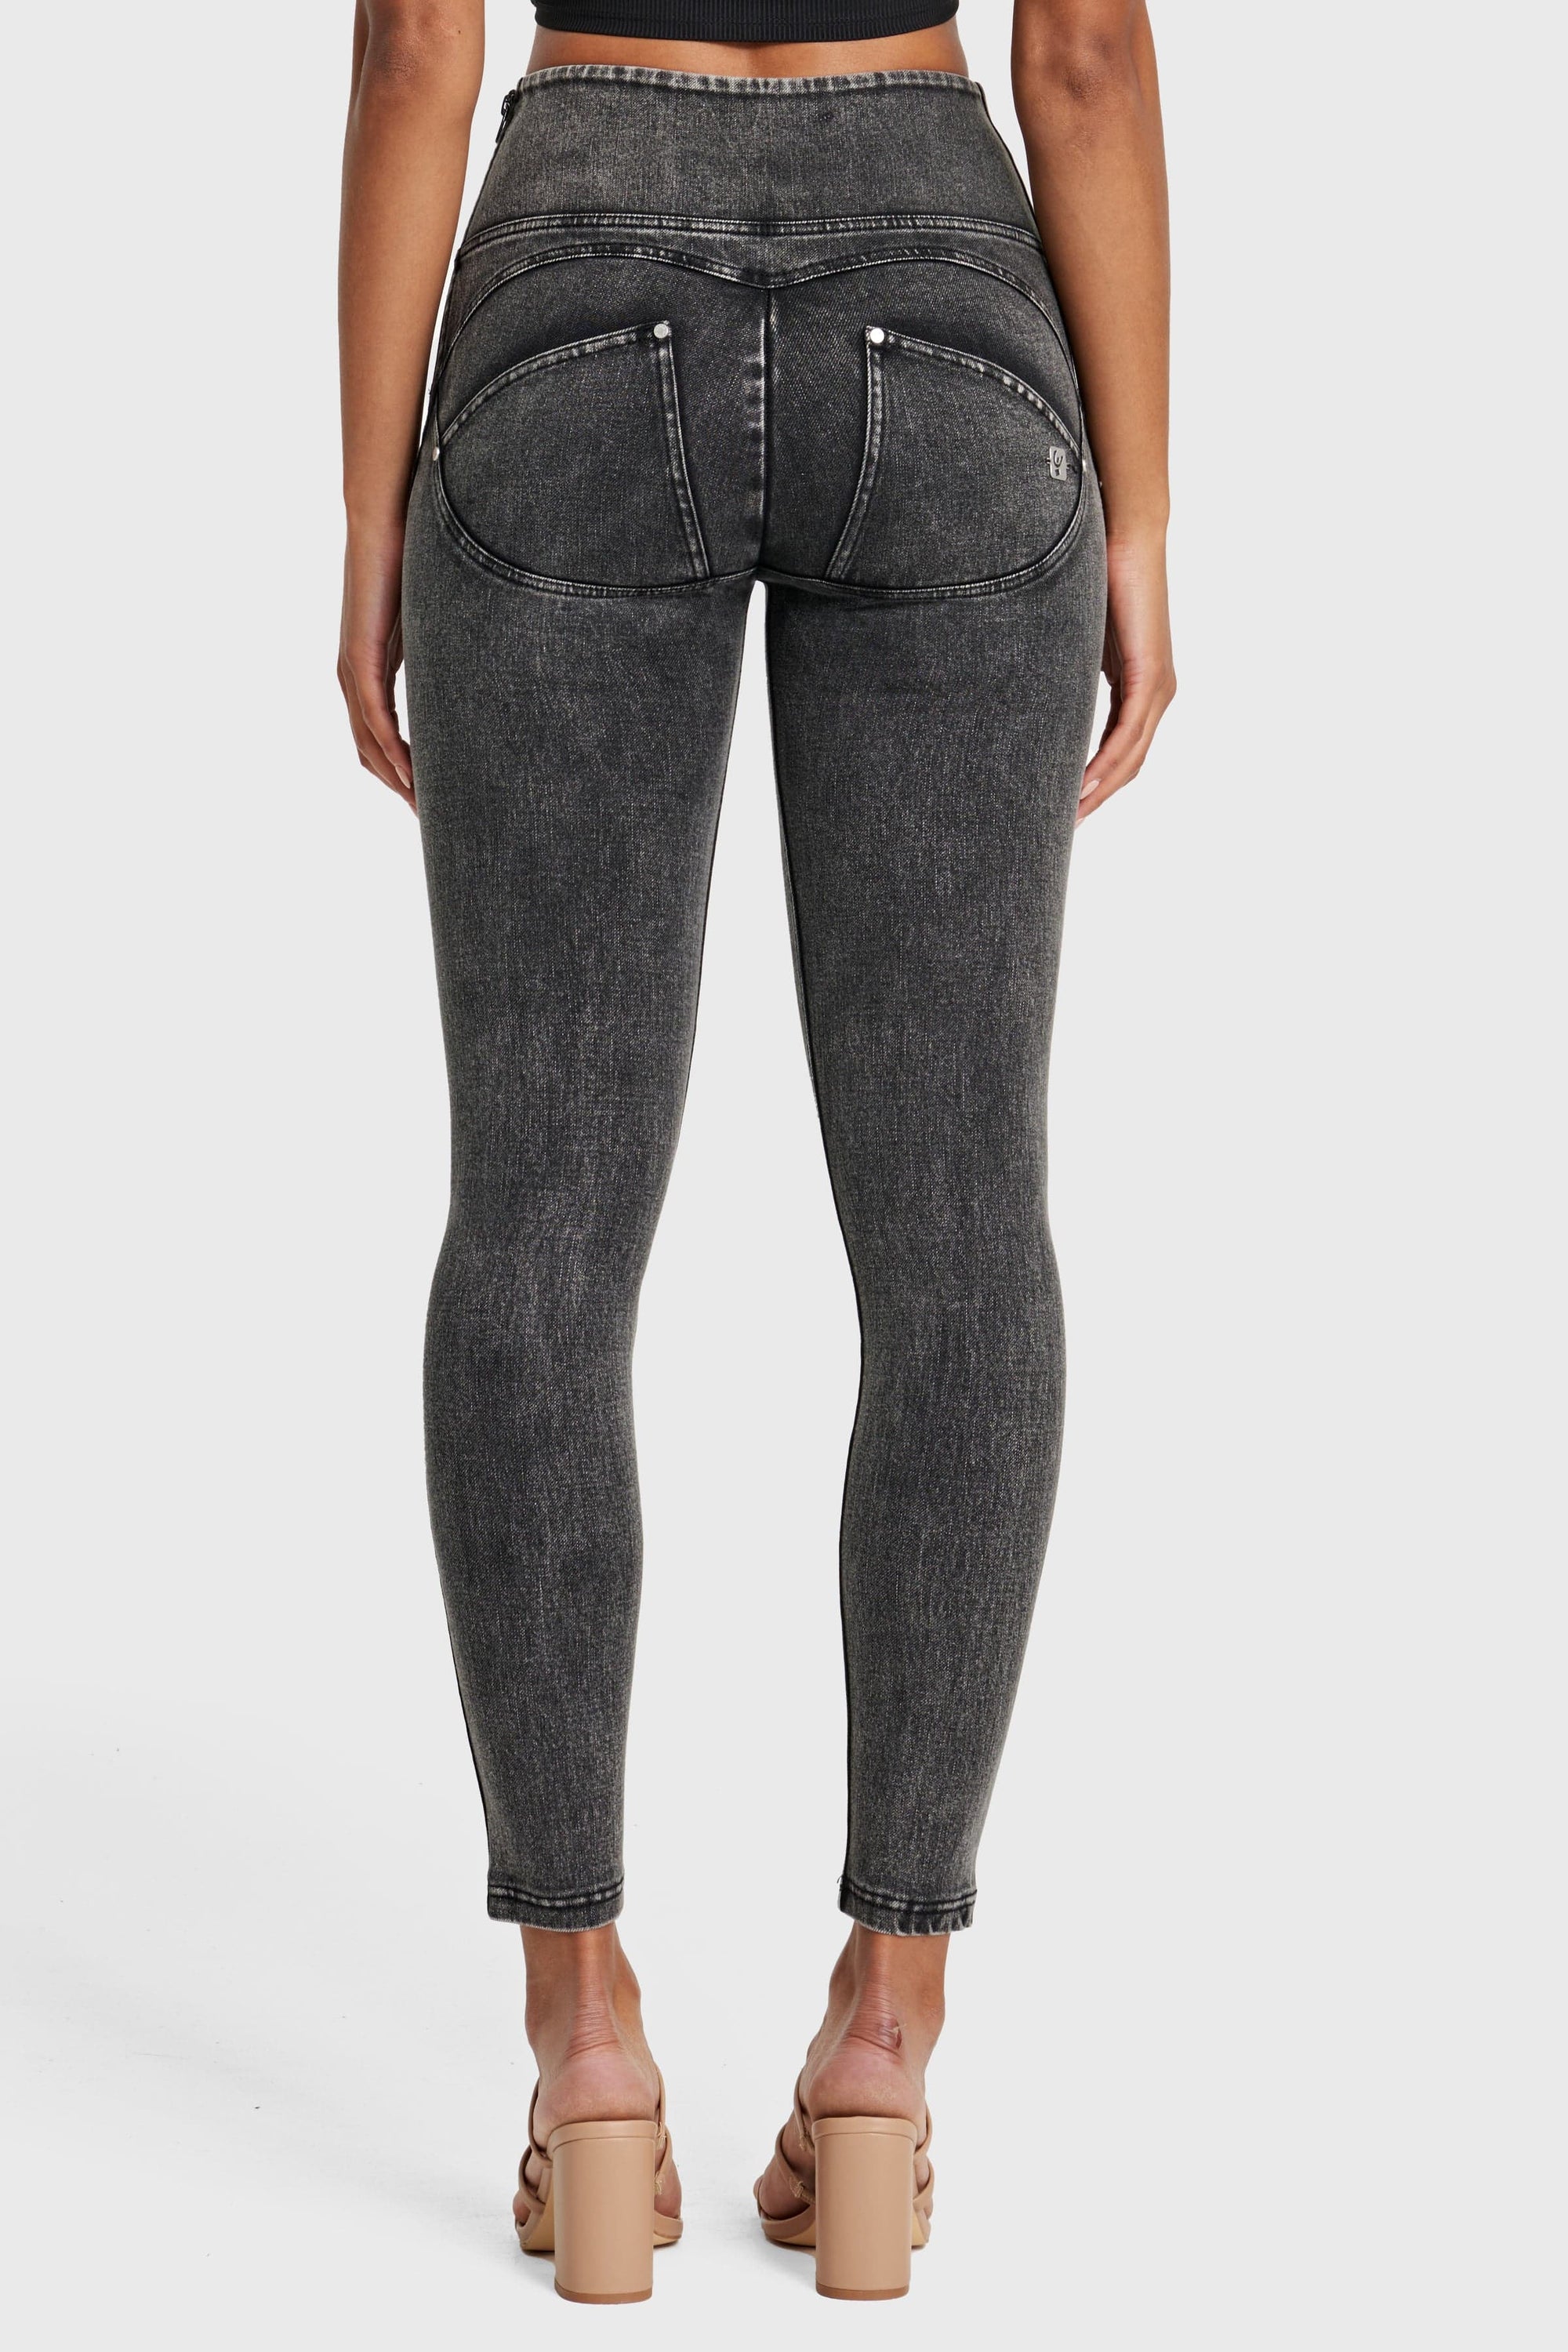 WR.UP® Snug Jeans - High Waisted - Full Length - Washed Black + Black Stitching 13